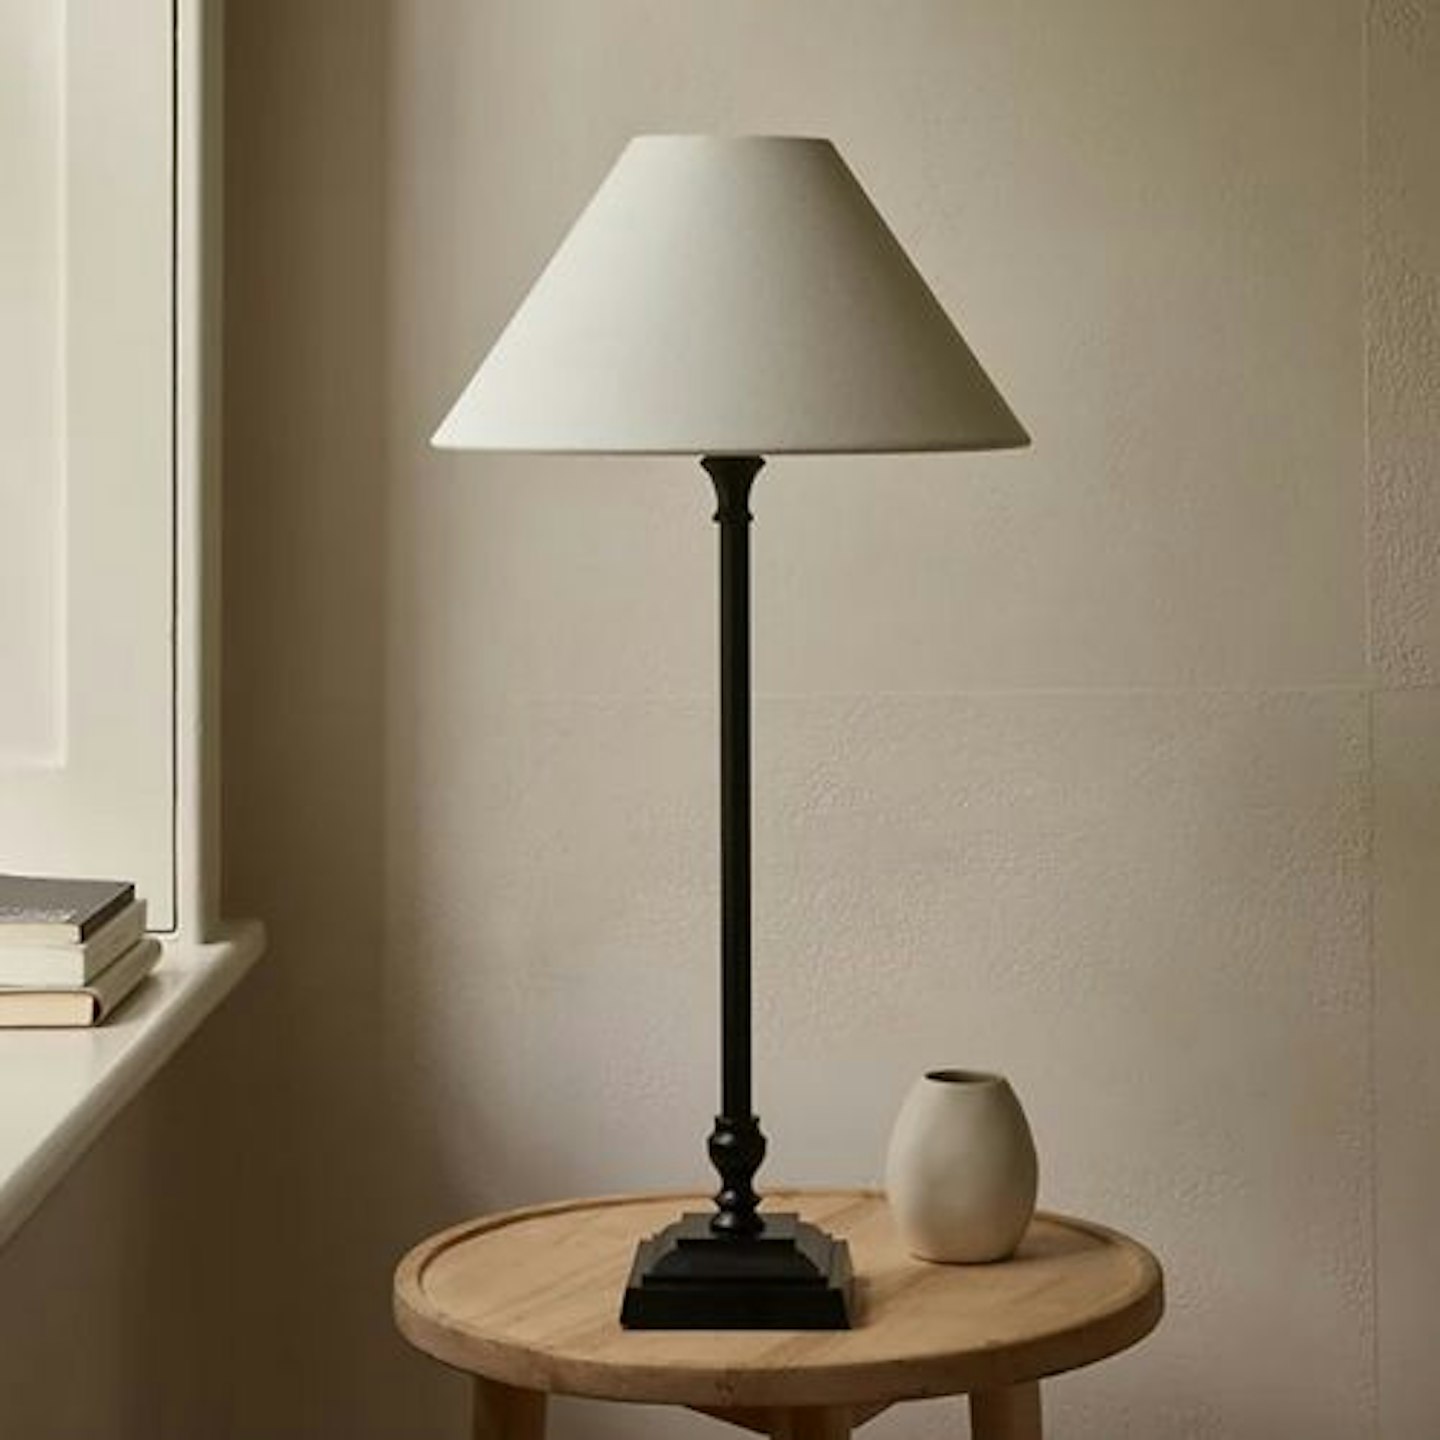 Portable Harris Lamp